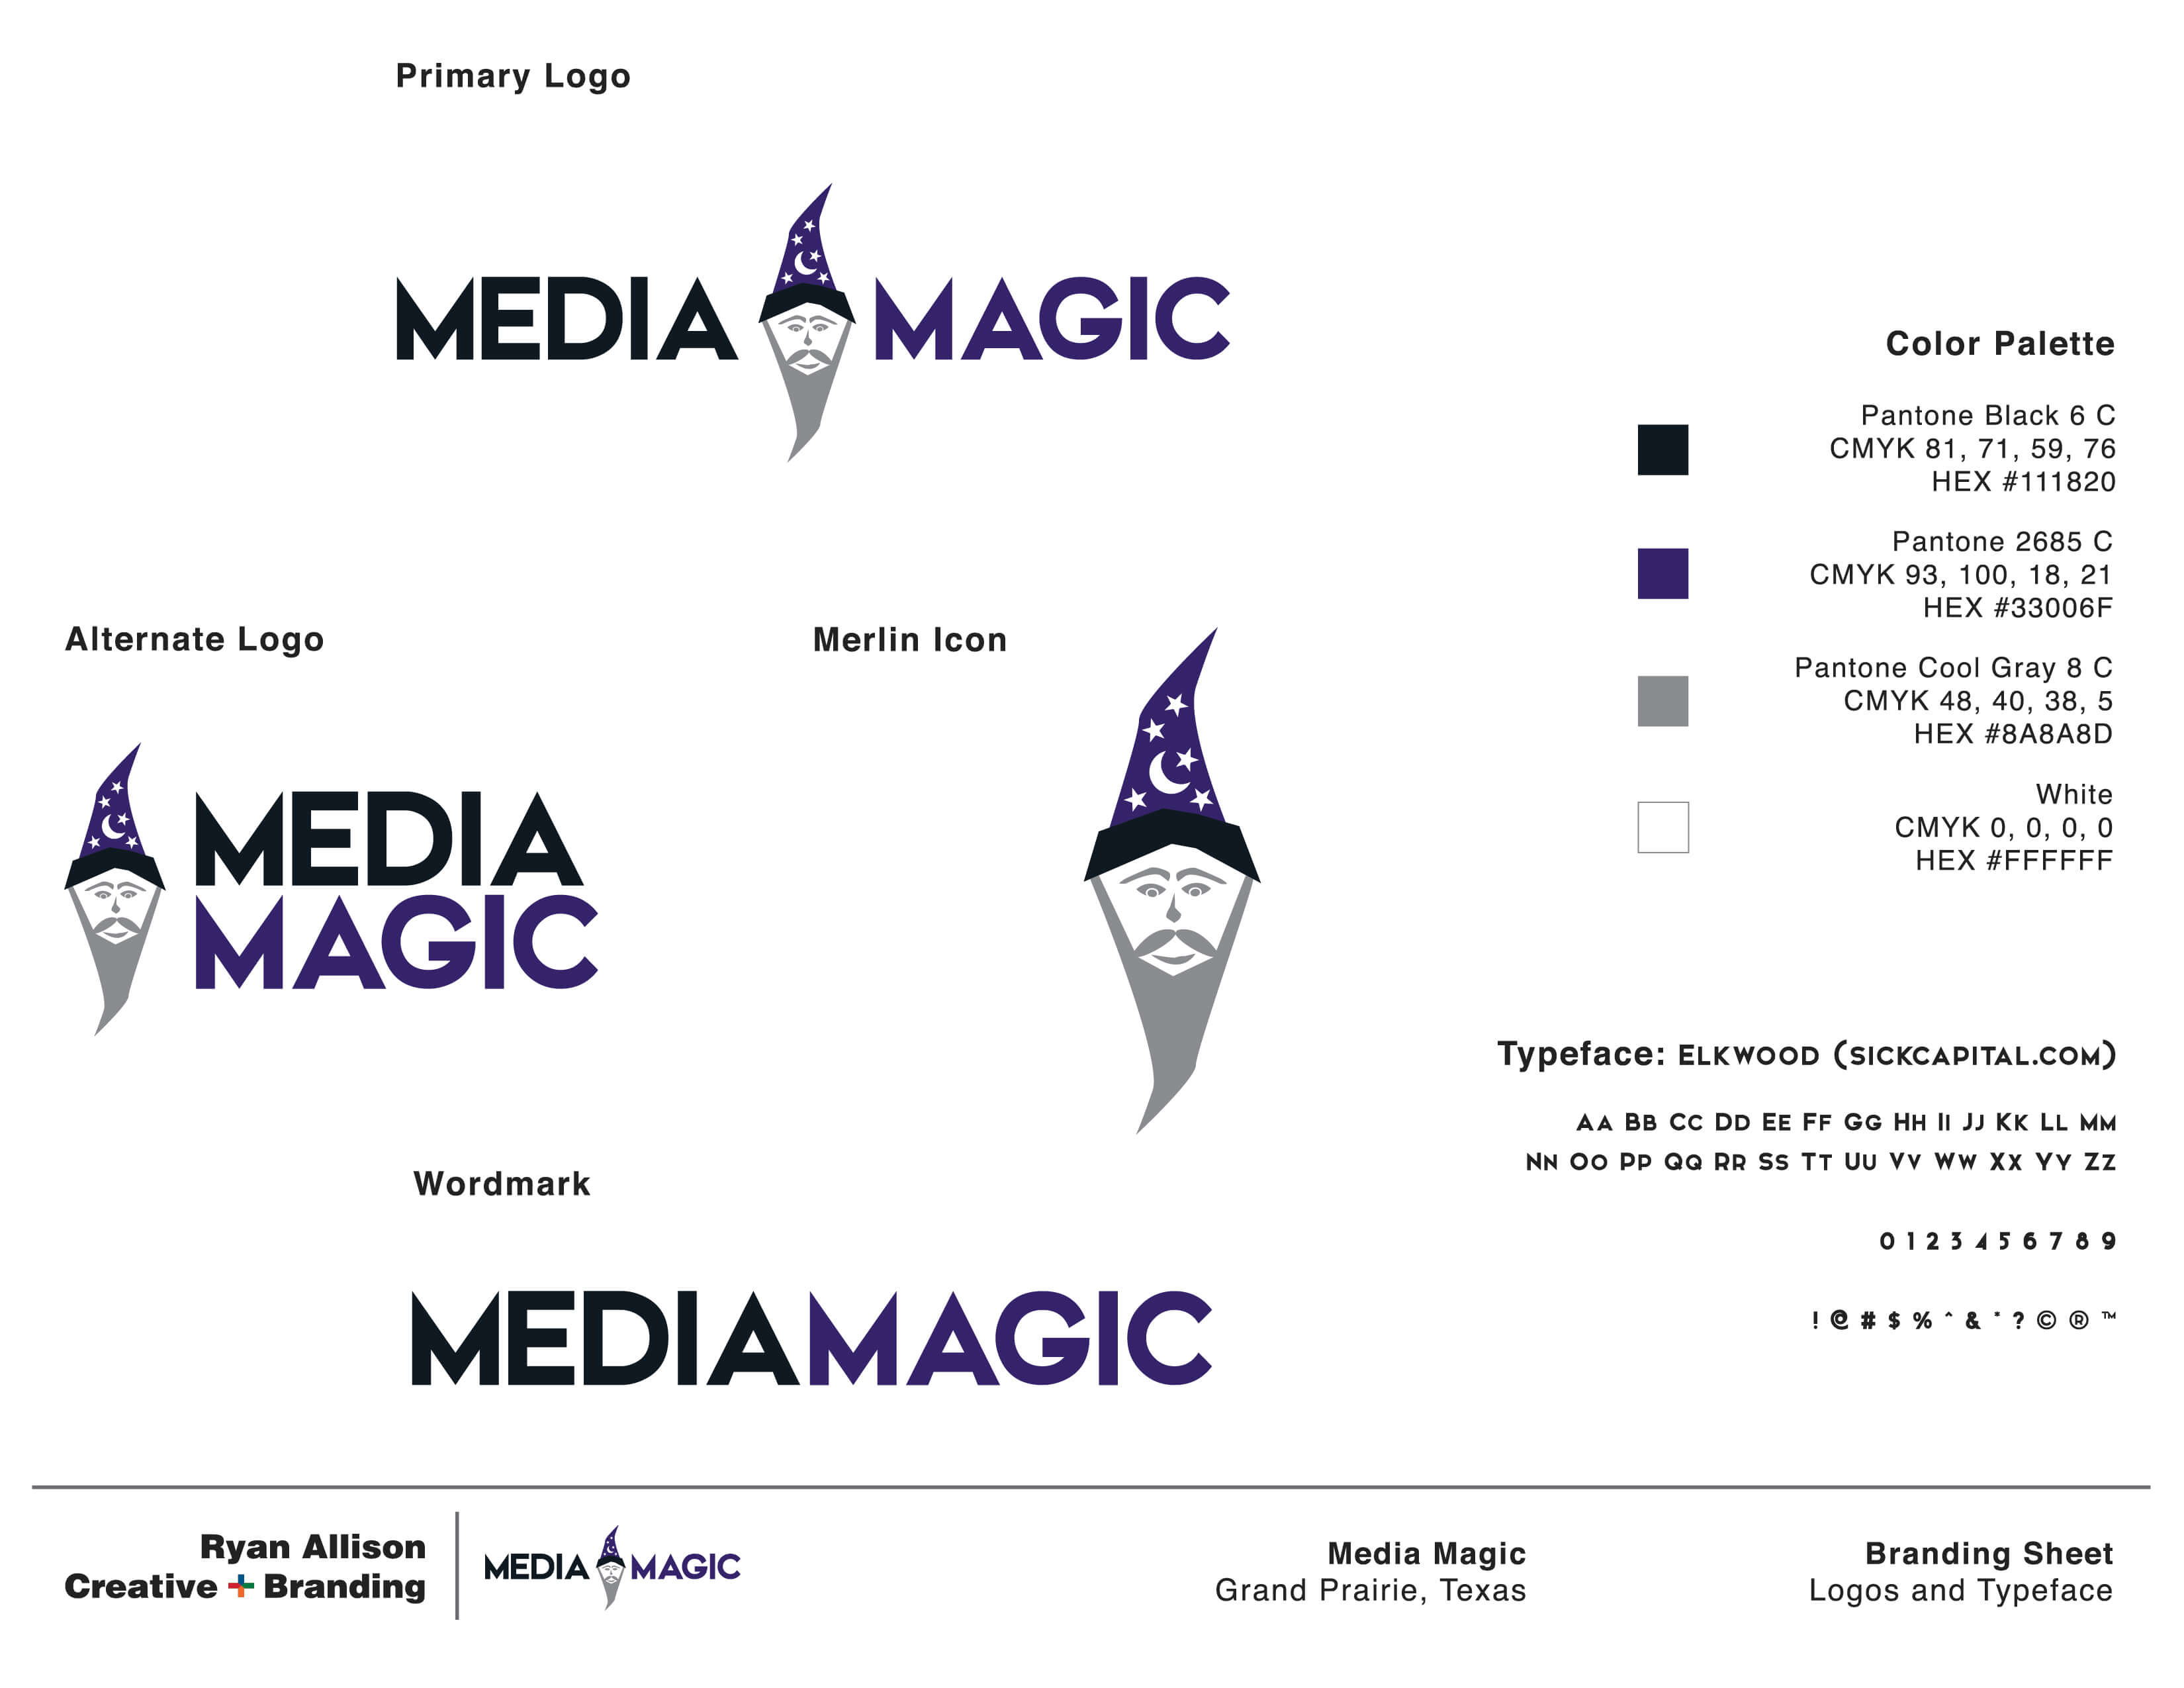 Media Magic - Branding Sheet Page 1 - Ryan Allison Creative + Branding